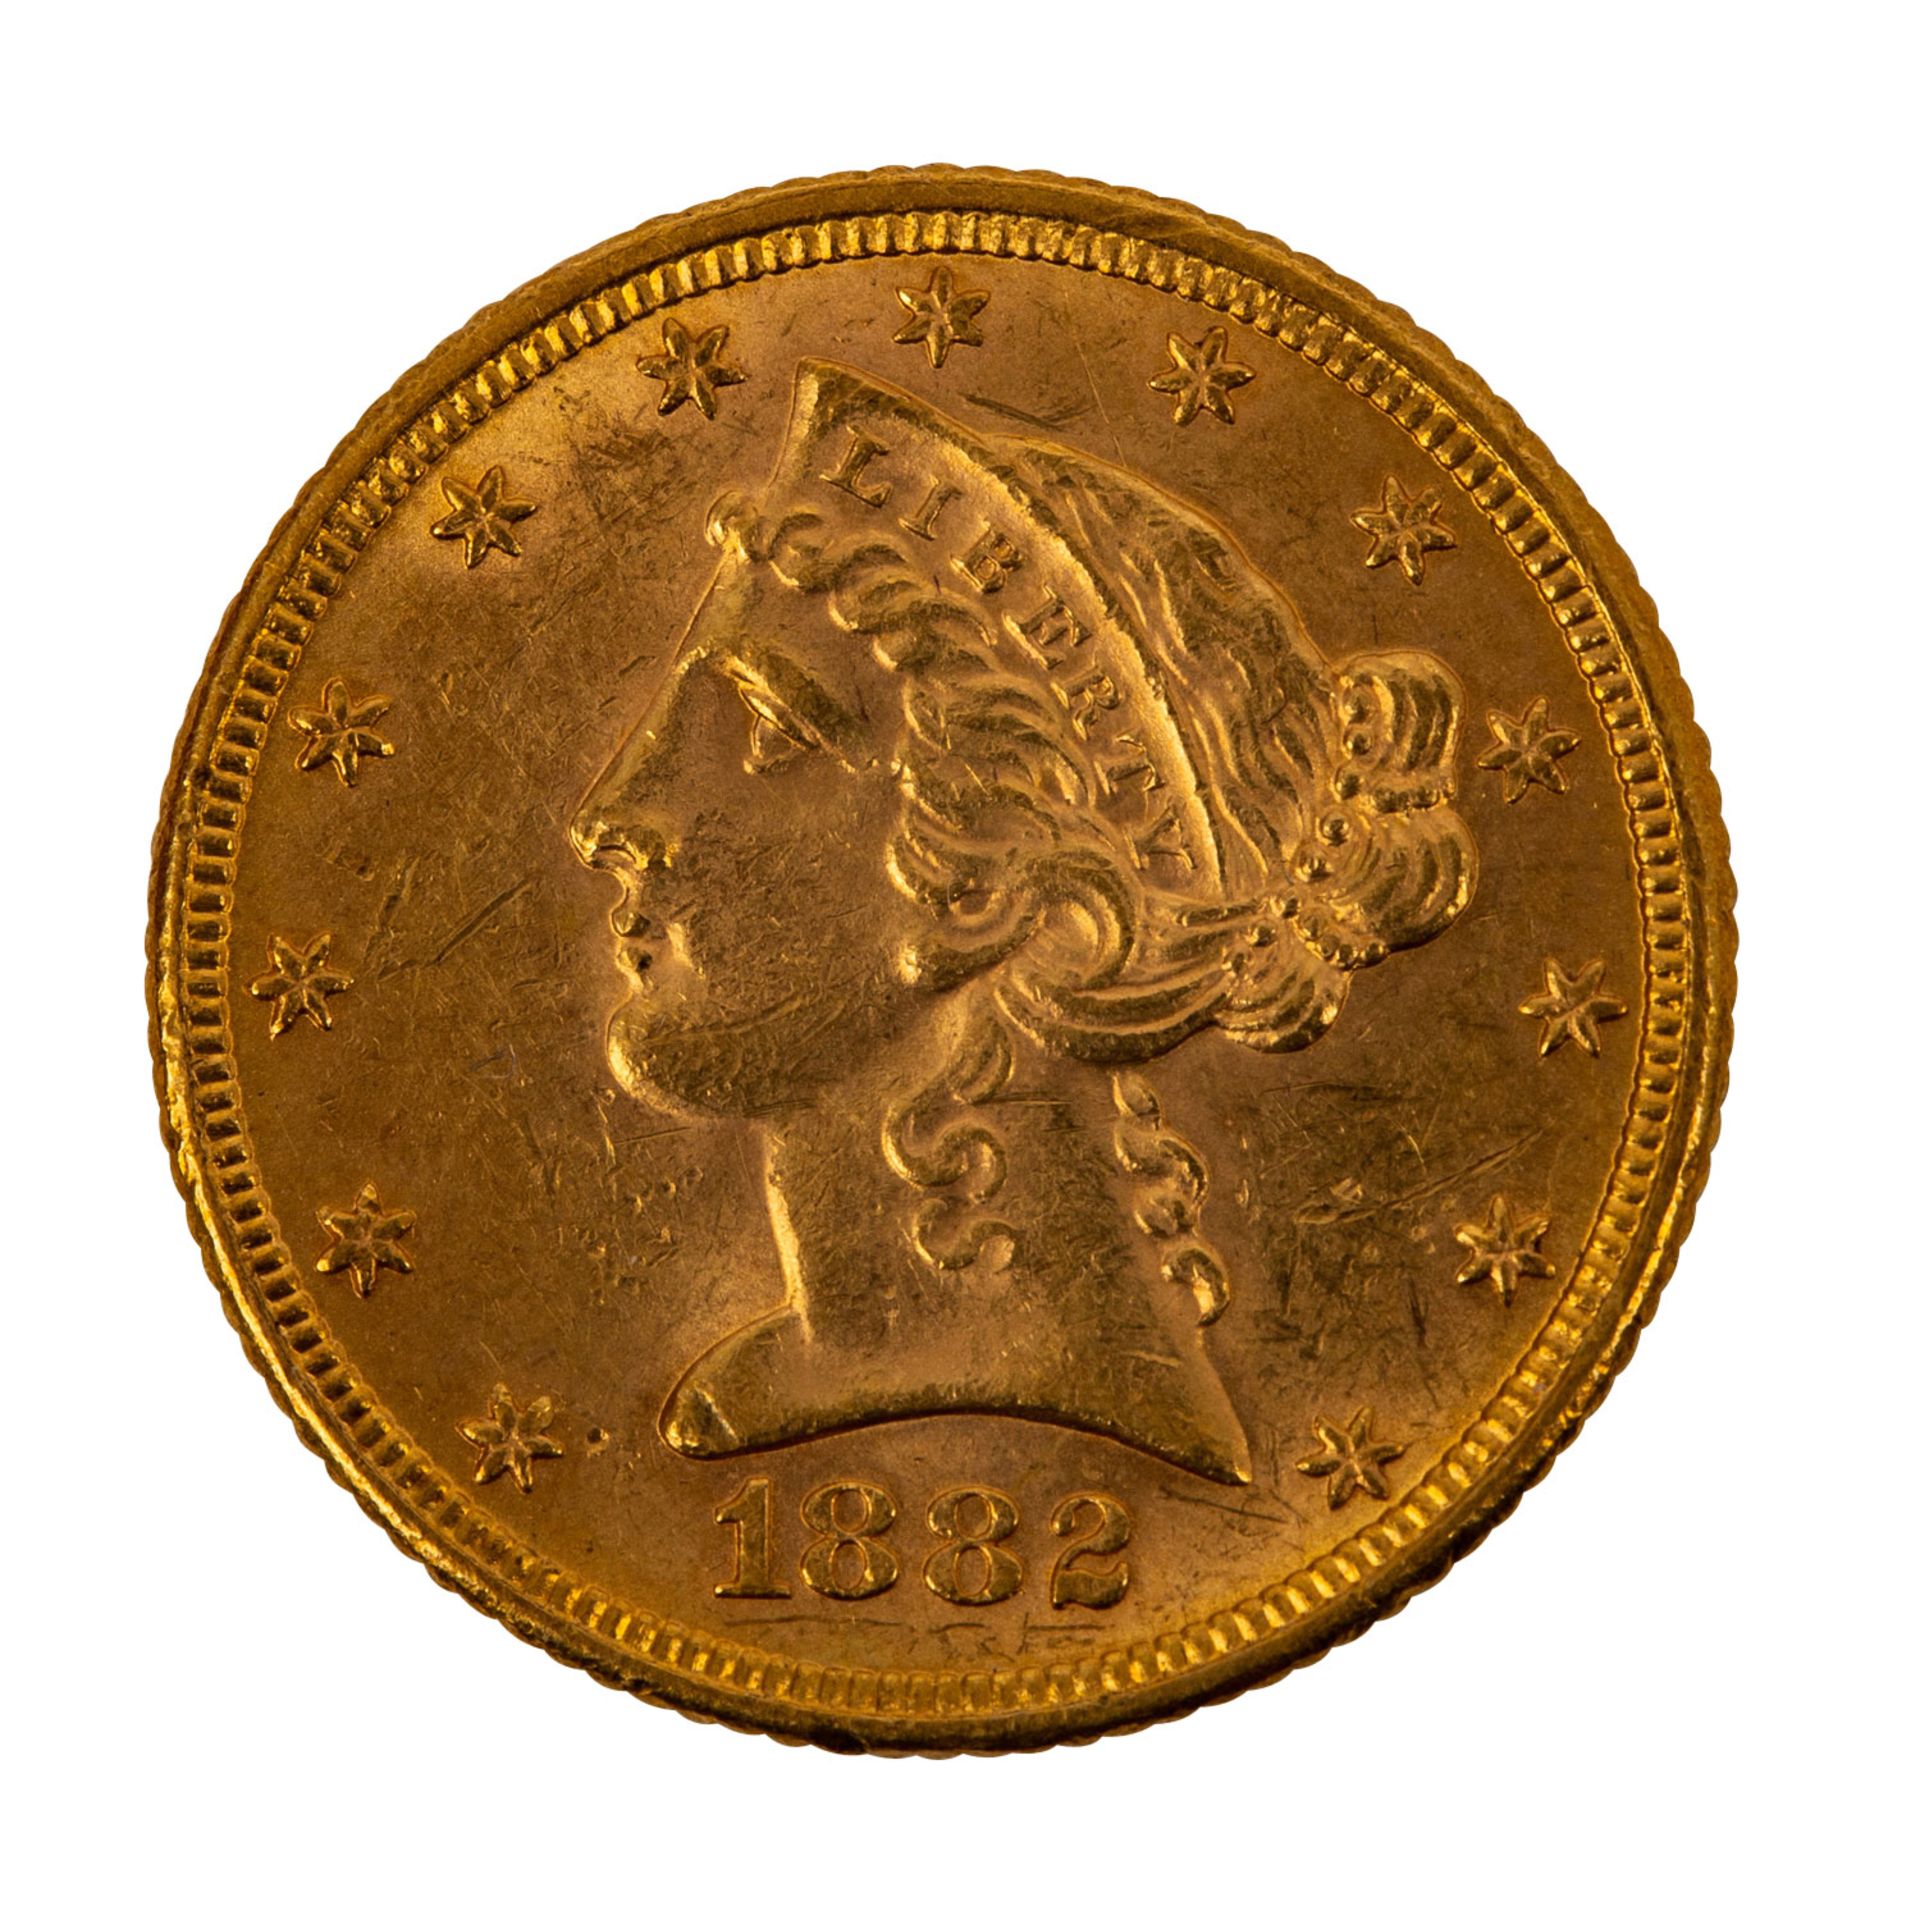 USA/GOLD - 5 Dollars 1882 Liberty Head, ca. 7,5 g fein, ss USA/GOLD - 5 dollars 1882 Liberty Head,